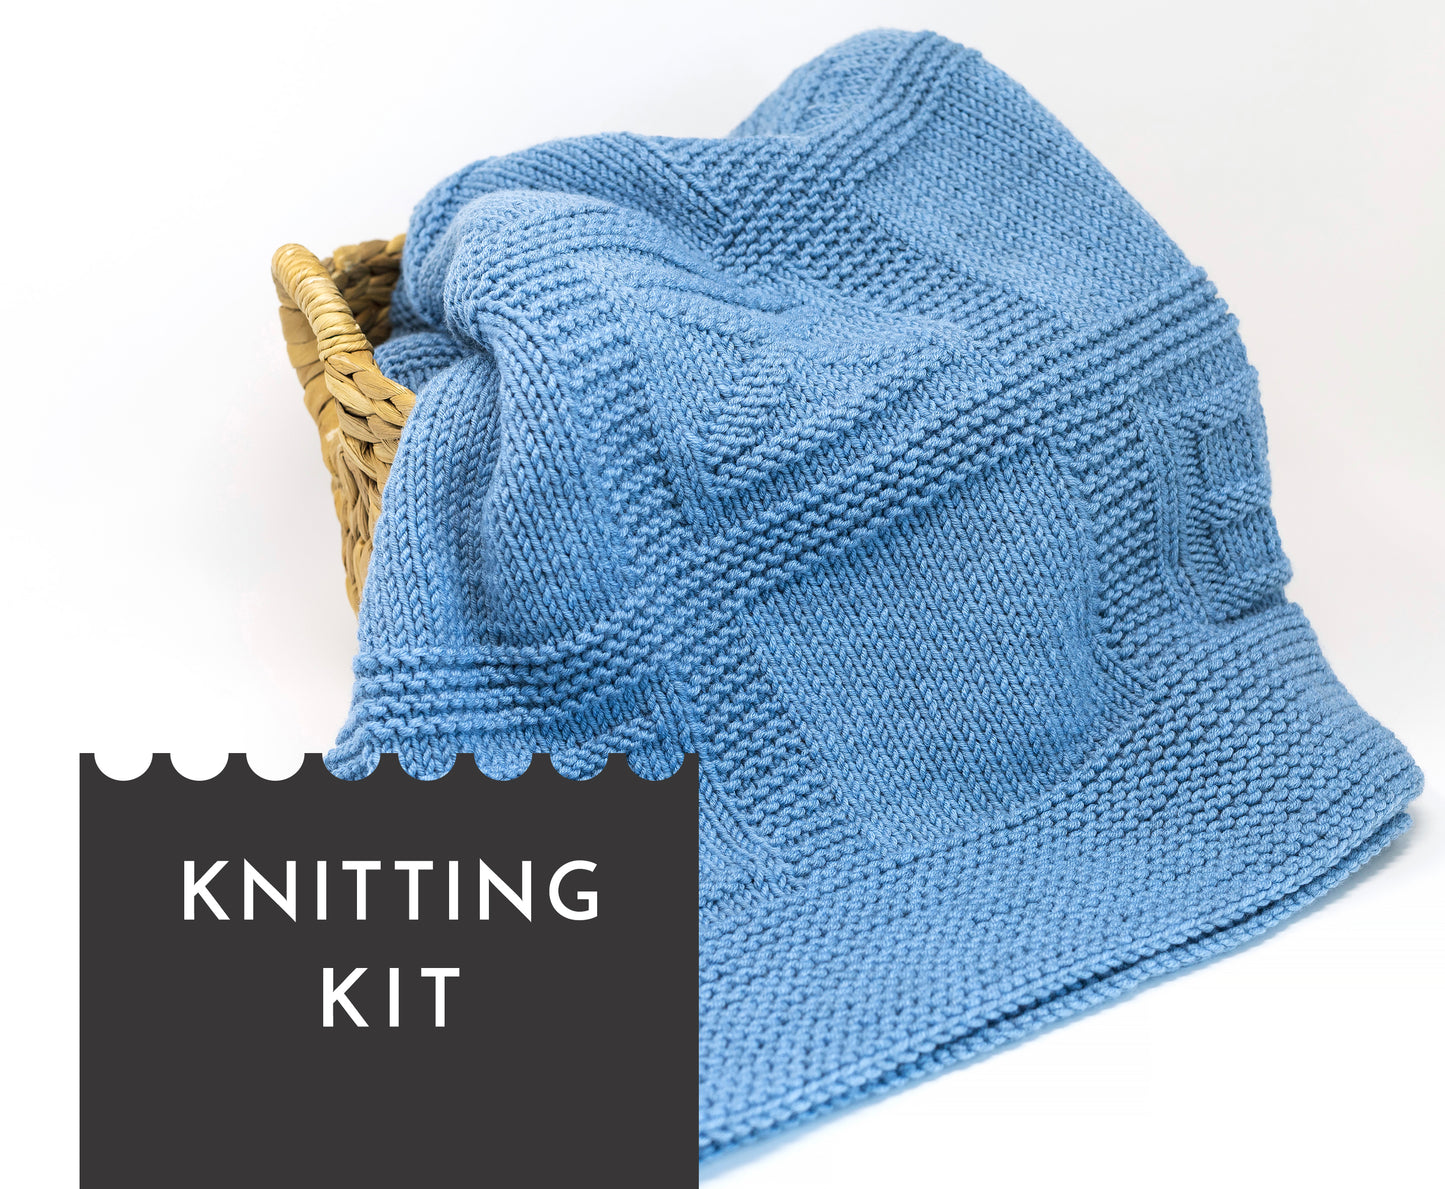 Blue merino wool yarn hand-knitted baby blanket in geometrical knitting pattern